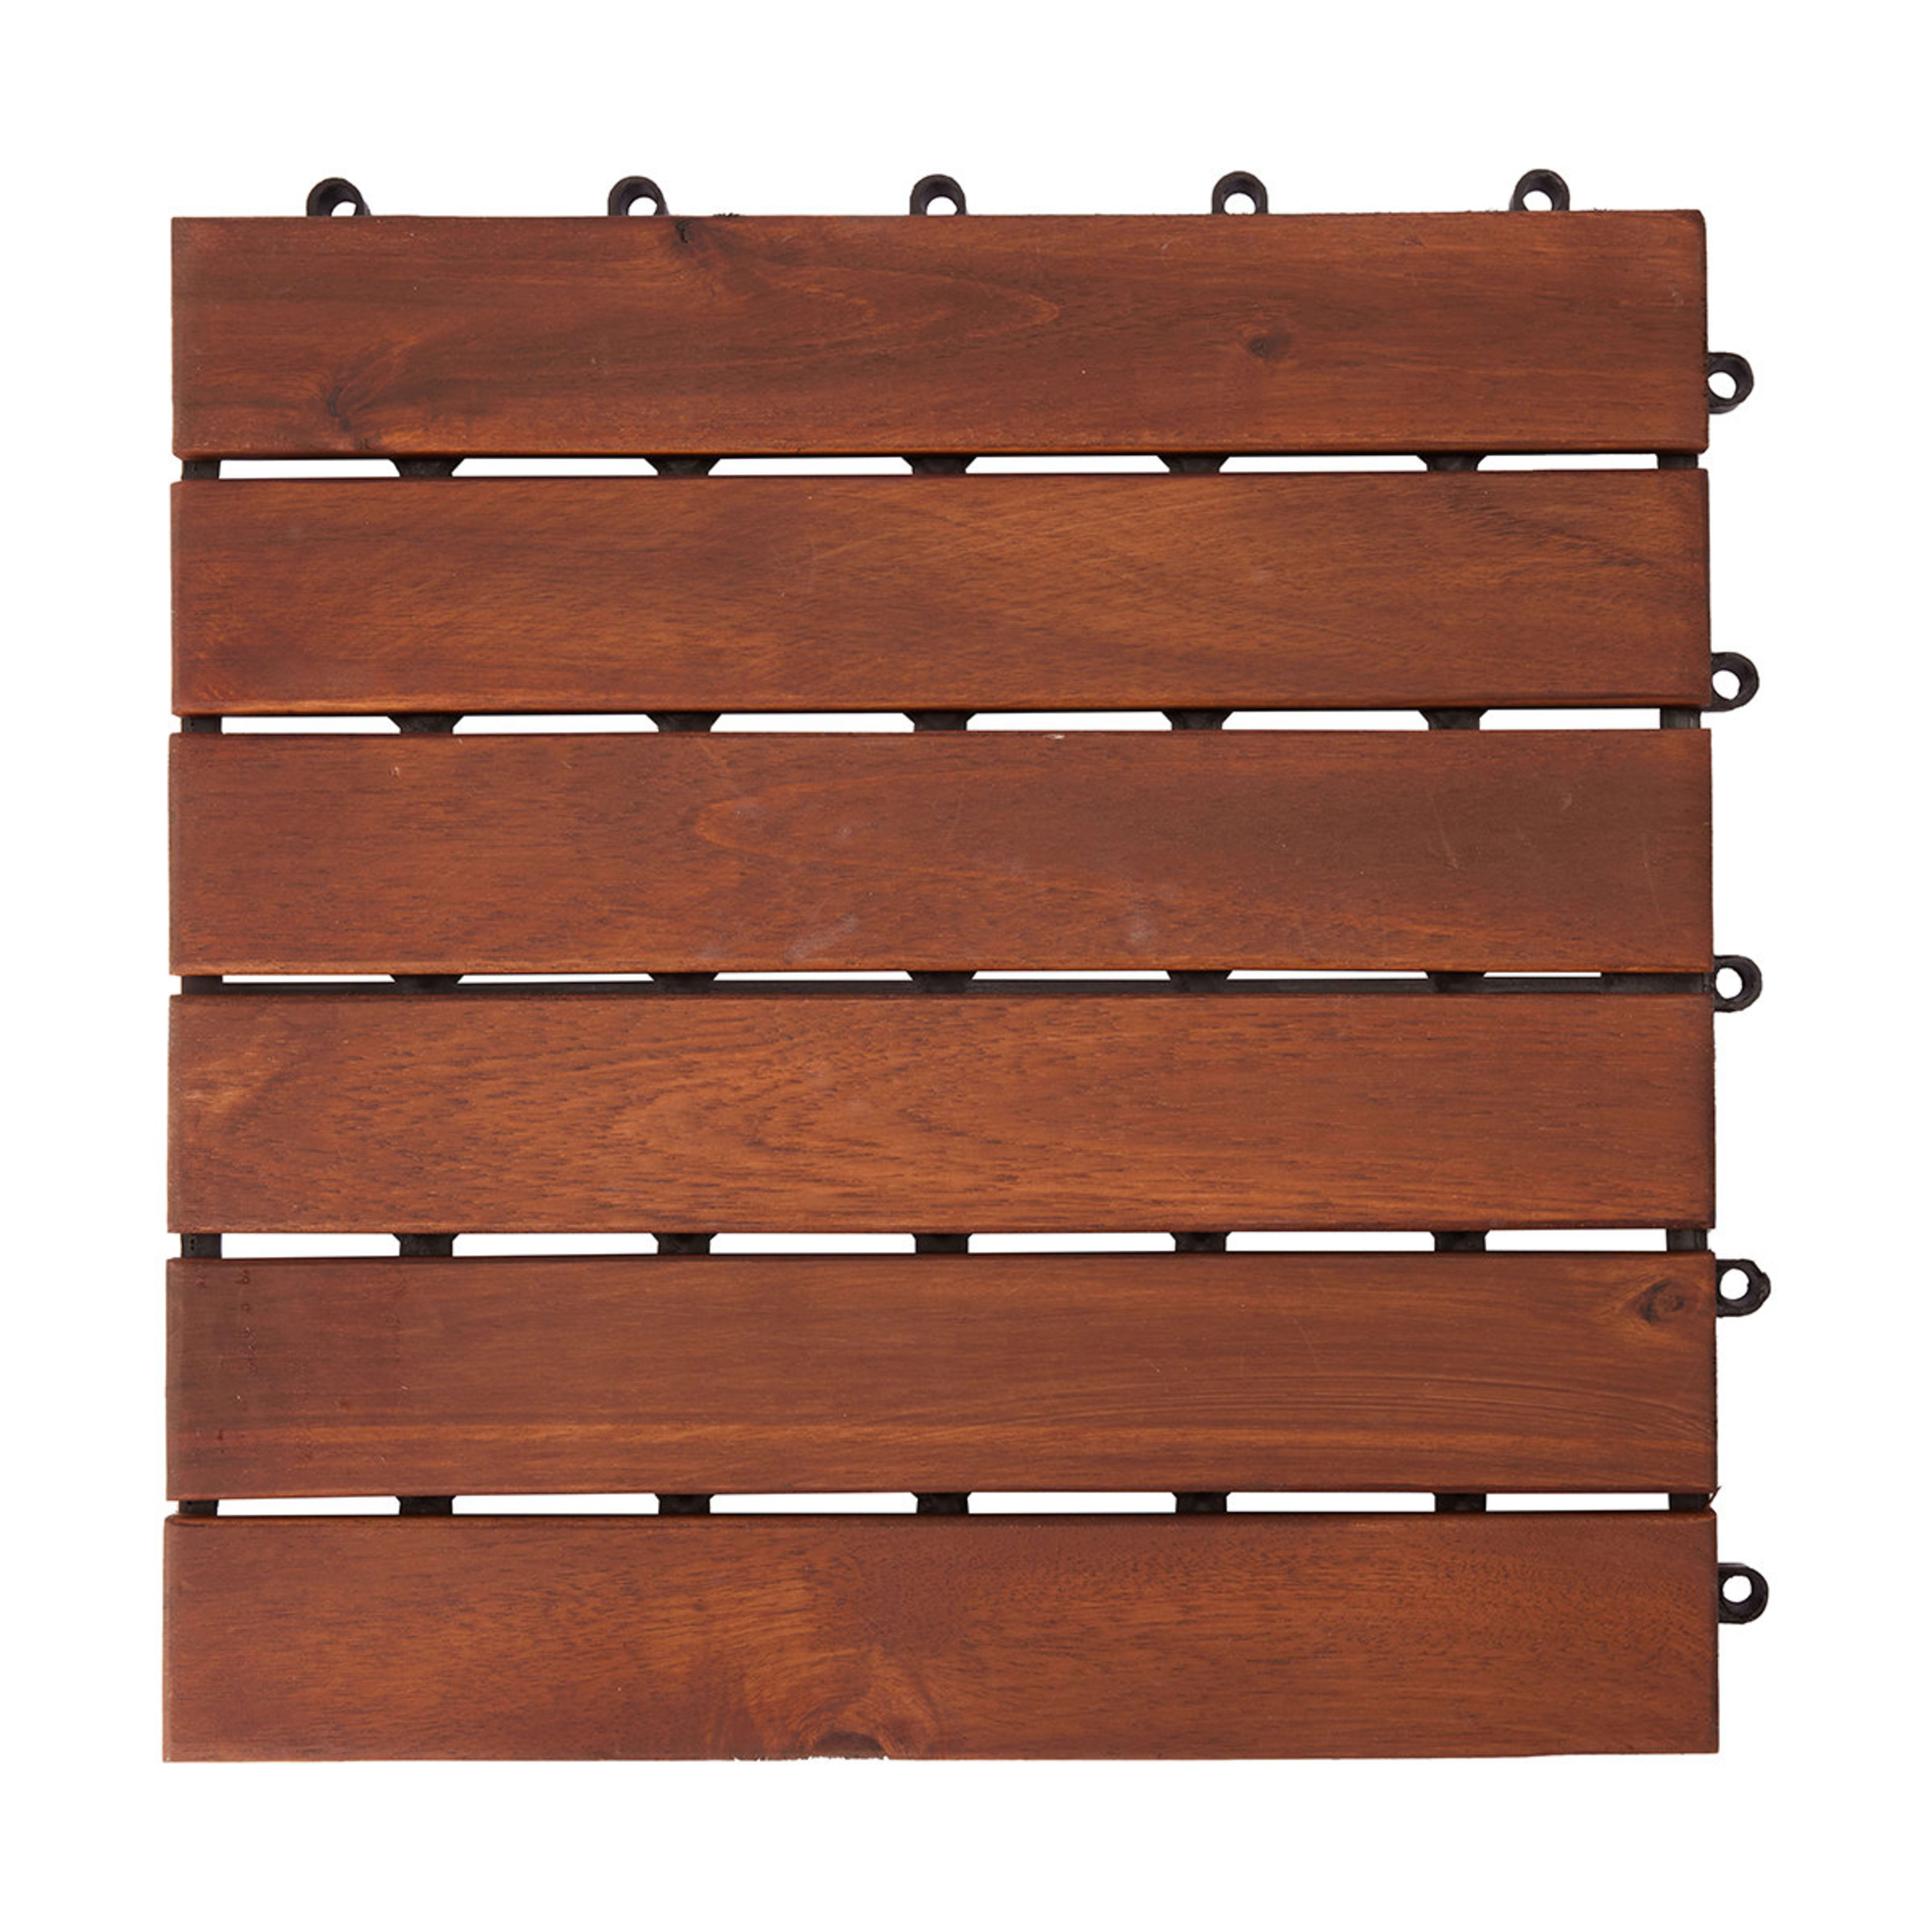 4 Pack Wooden Decking Tiles - Kmart